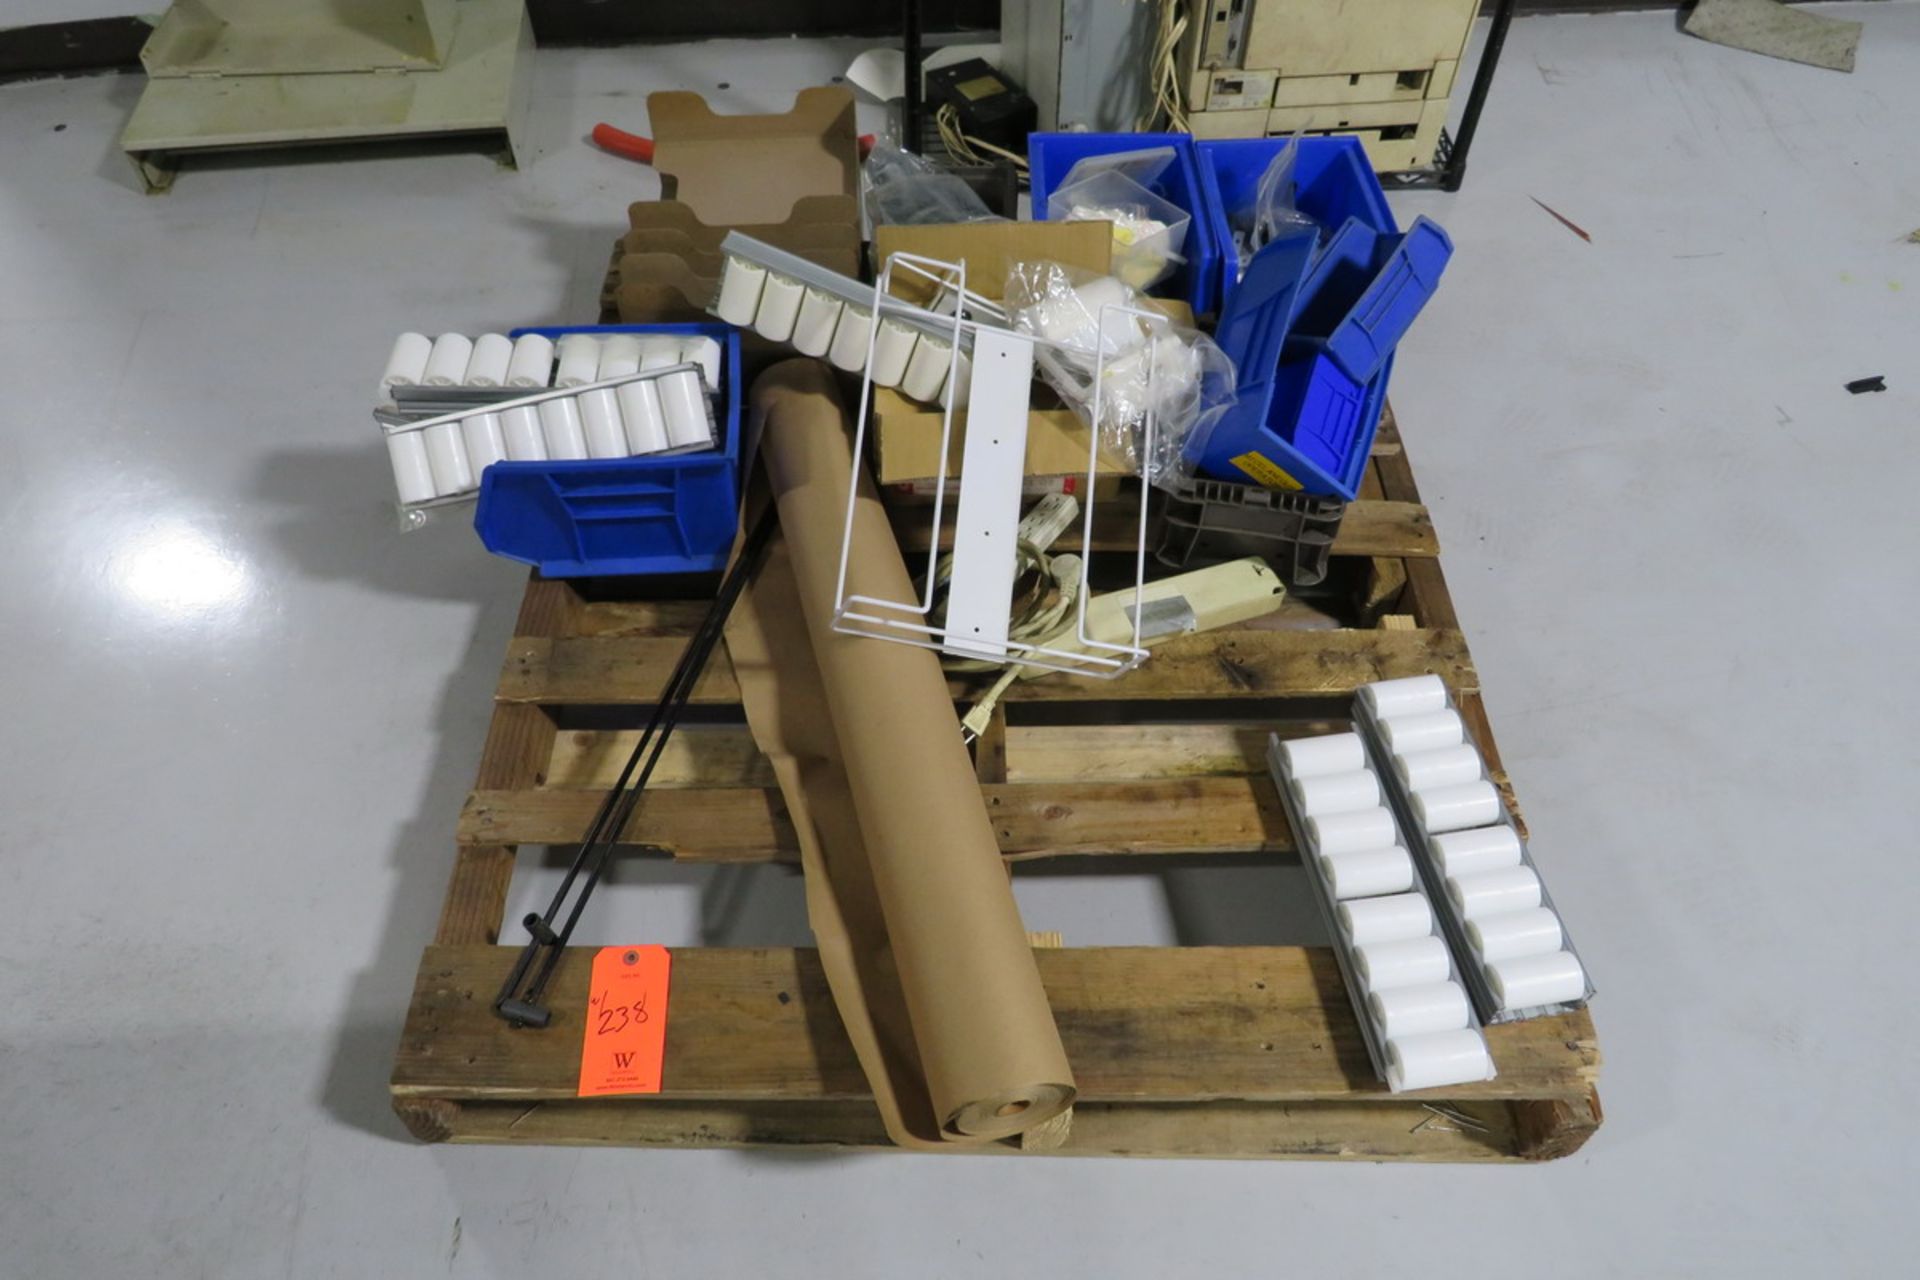 Lot - Pallets of Assorted Caulk Guns, Caulk, Spray Paint, Plastic Bins - Image 2 of 2